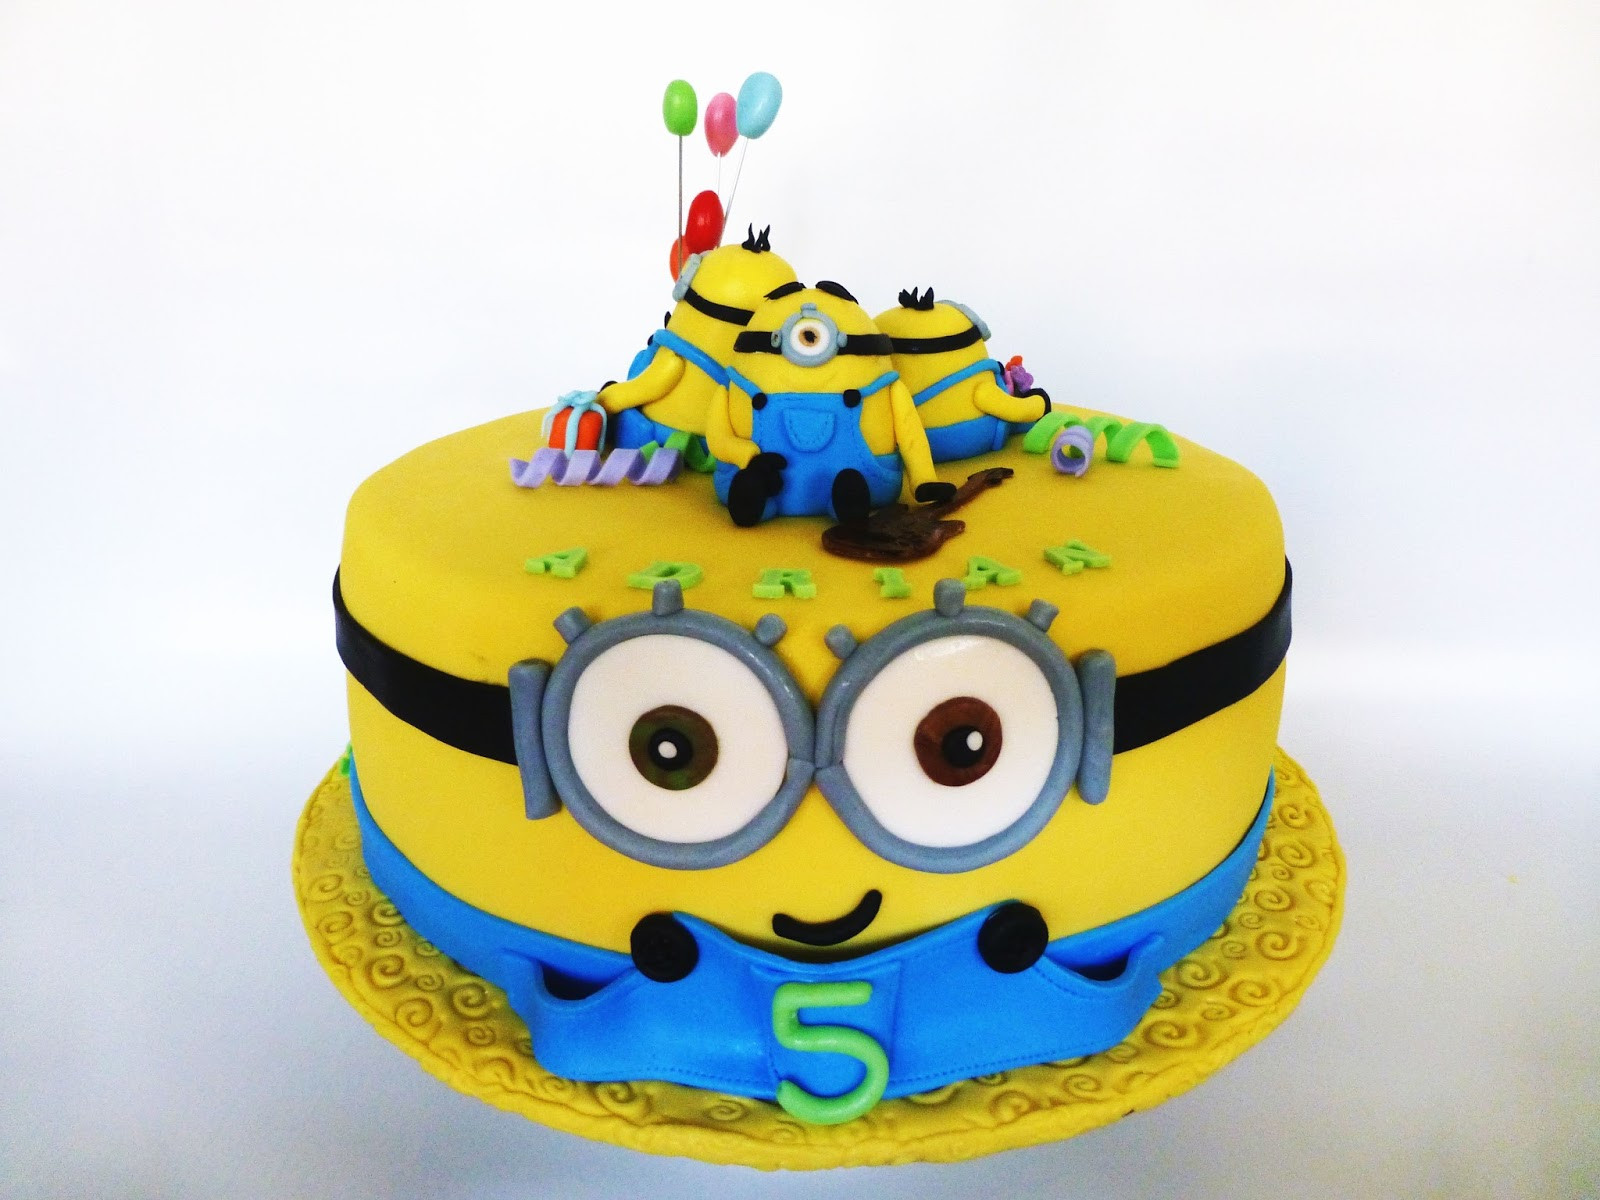 Best ideas about Minion Birthday Cake
. Save or Pin CakeSophia Minions cake Now.